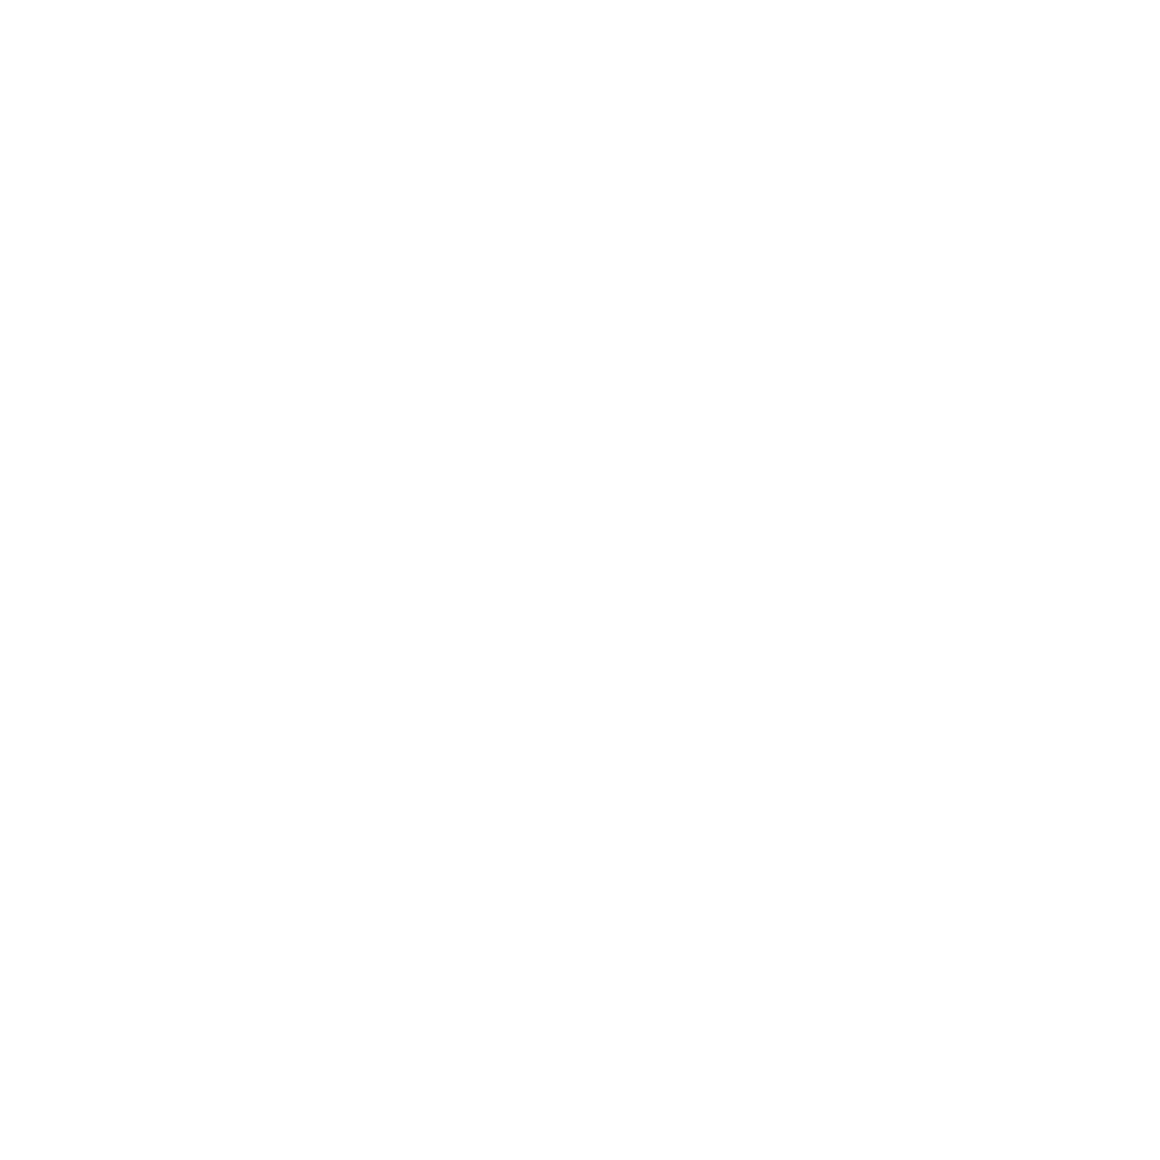 InSyncSenses